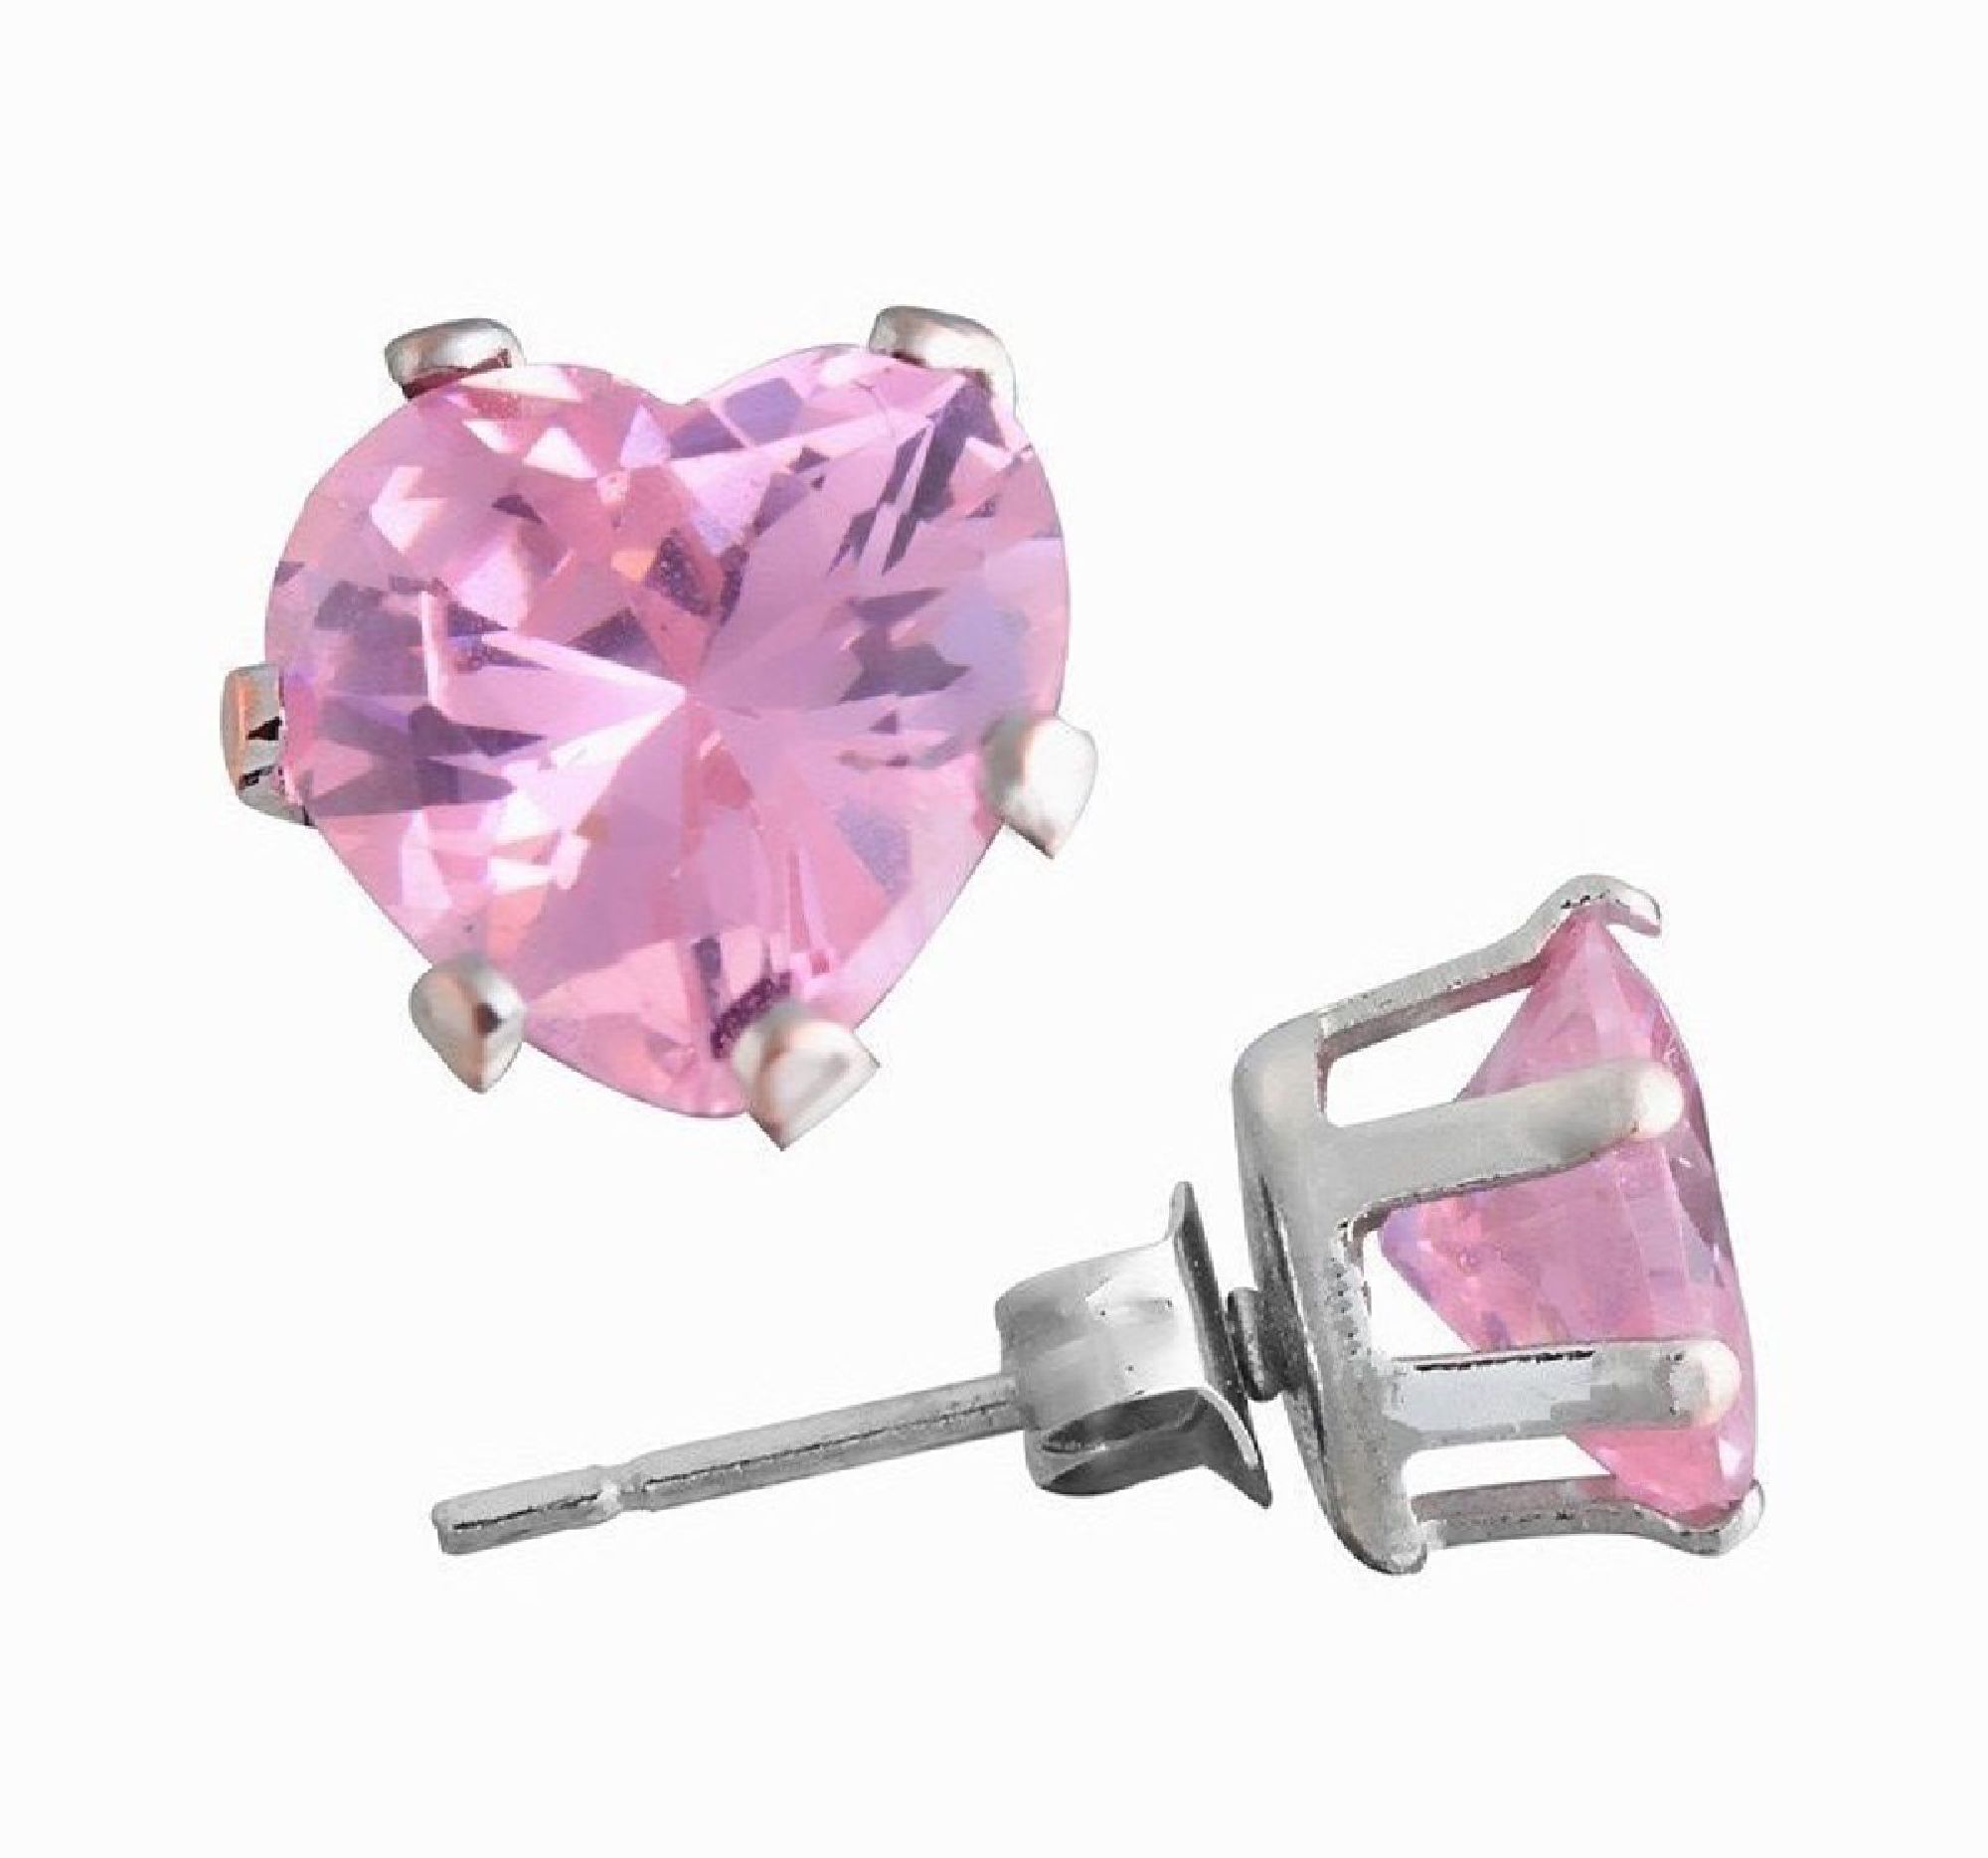 5 Carat Heart Shape Pink Diamond manmade Stud Earrings for Woman in Sterling Silver Designed in France